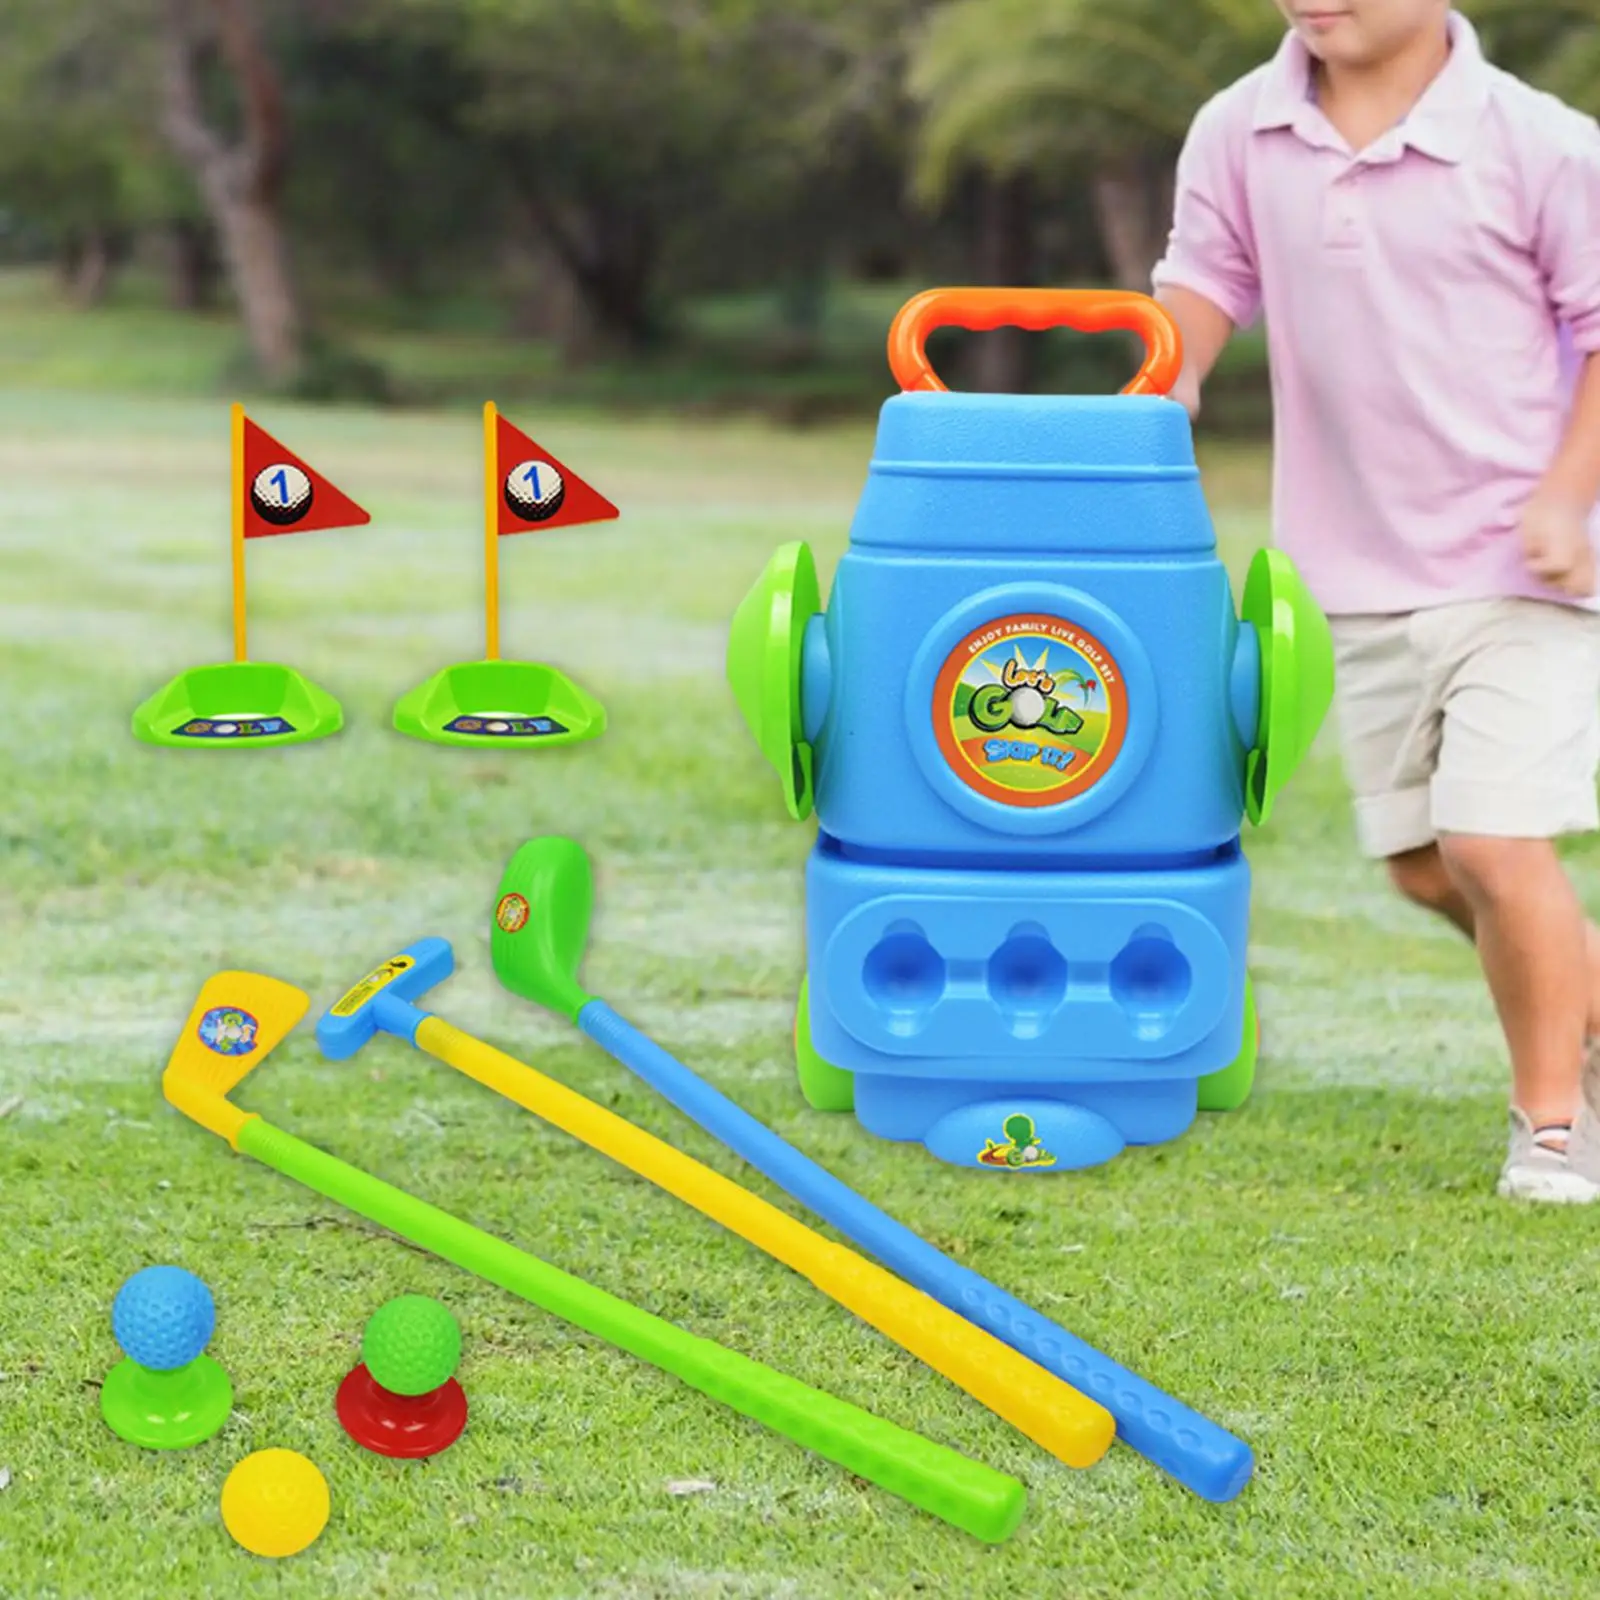 

Kids Golf Club Set Toy Backyard Games Hand Eye Coordination Parent Child Interactive Toy Birthday Gifts for Boys Girls Children